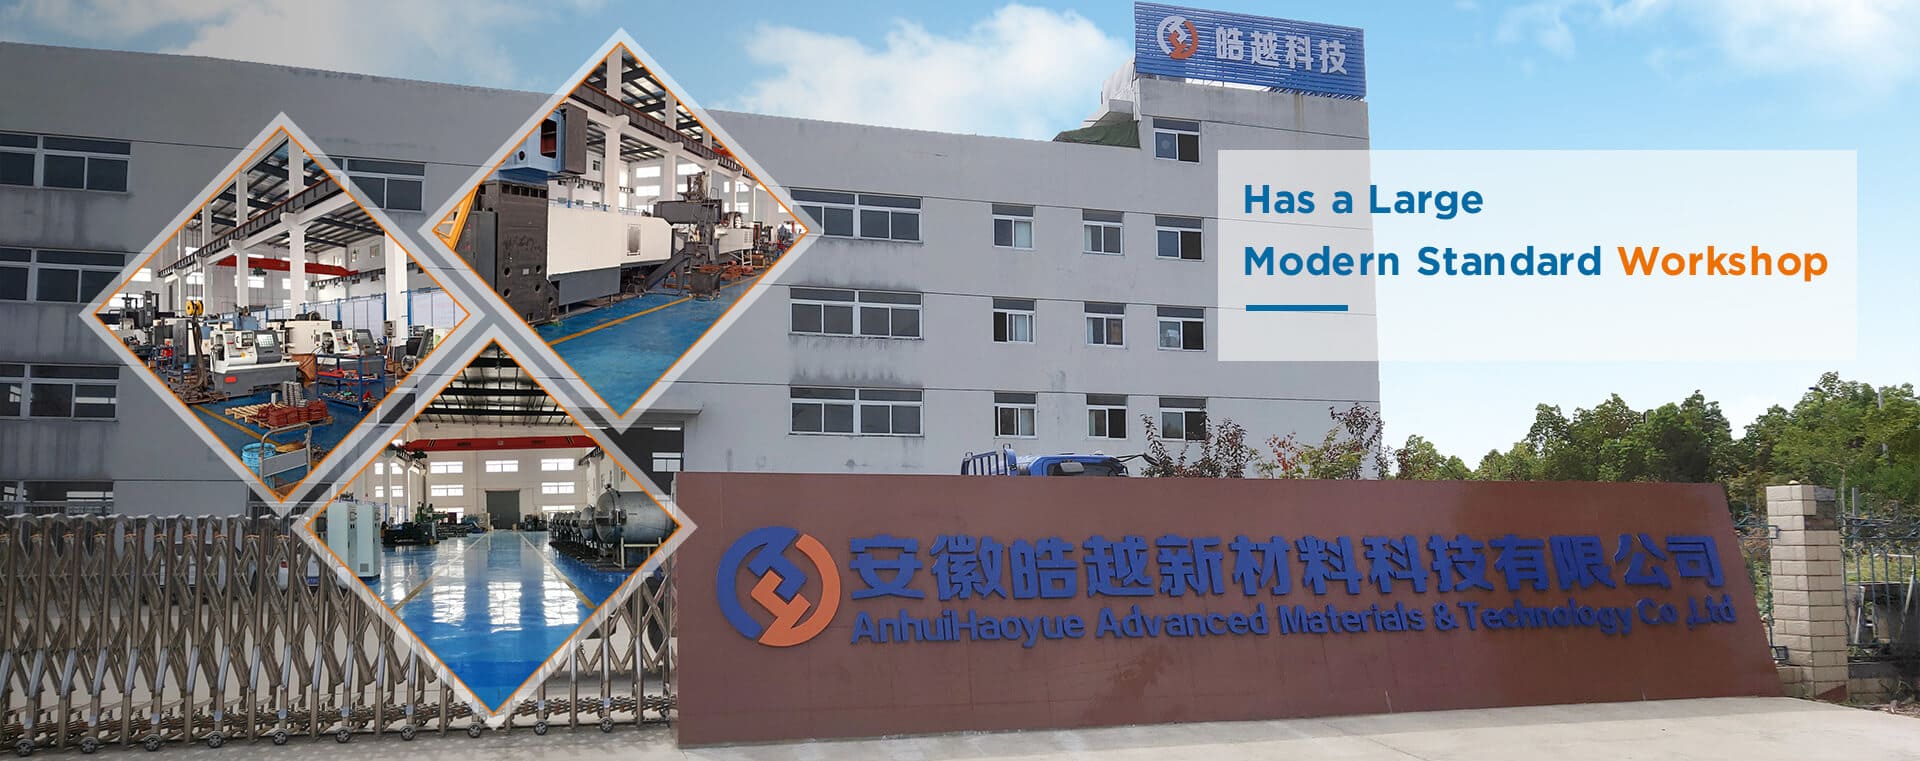 Shanghai Haoyue Technology Co., Ltd.